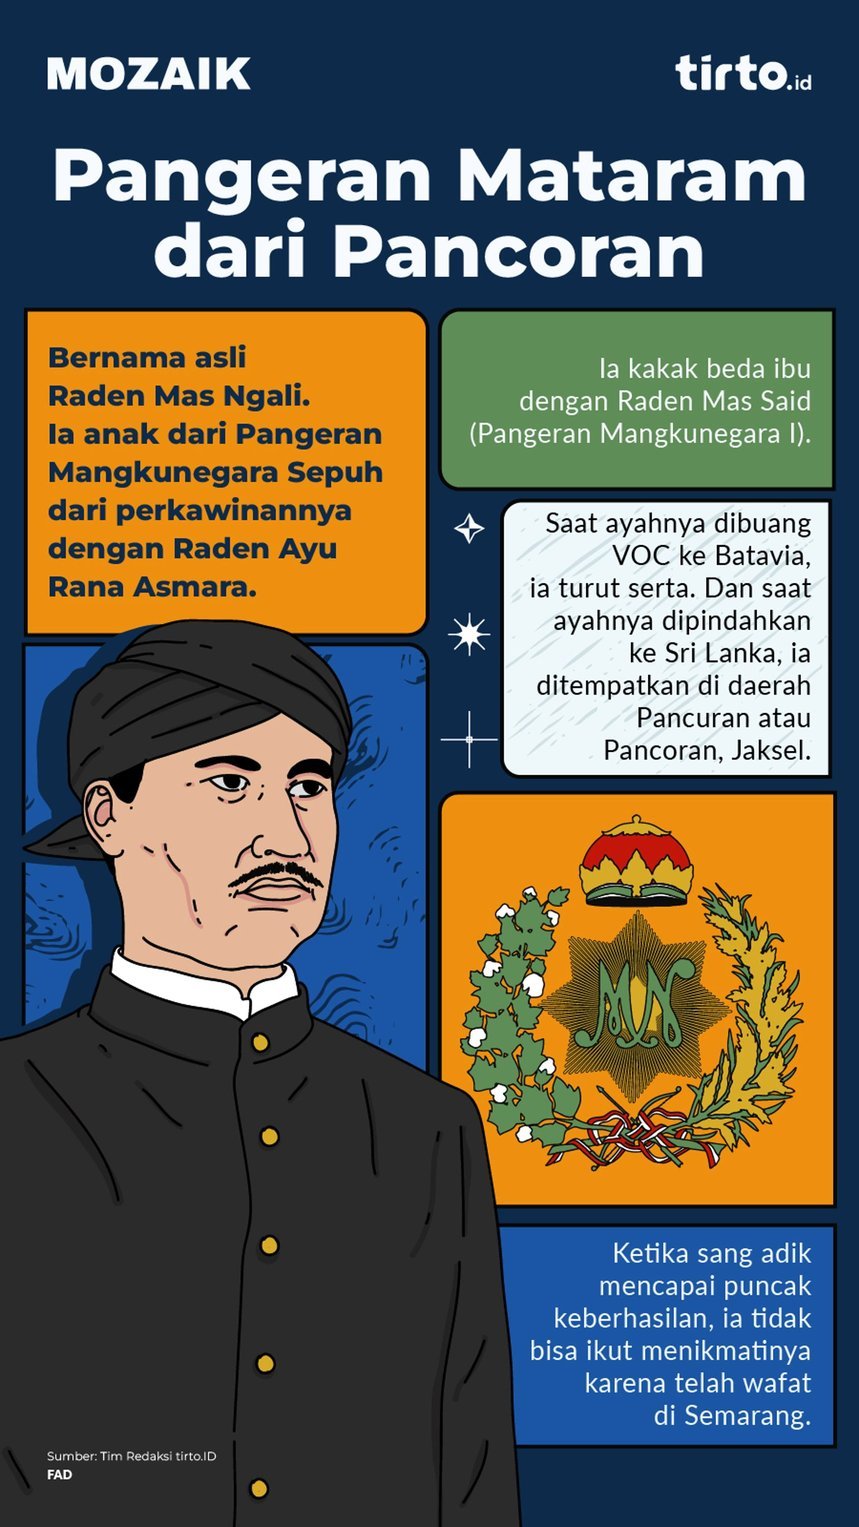 Infografik Mozaik Pangeran Mataram dari Pancoran